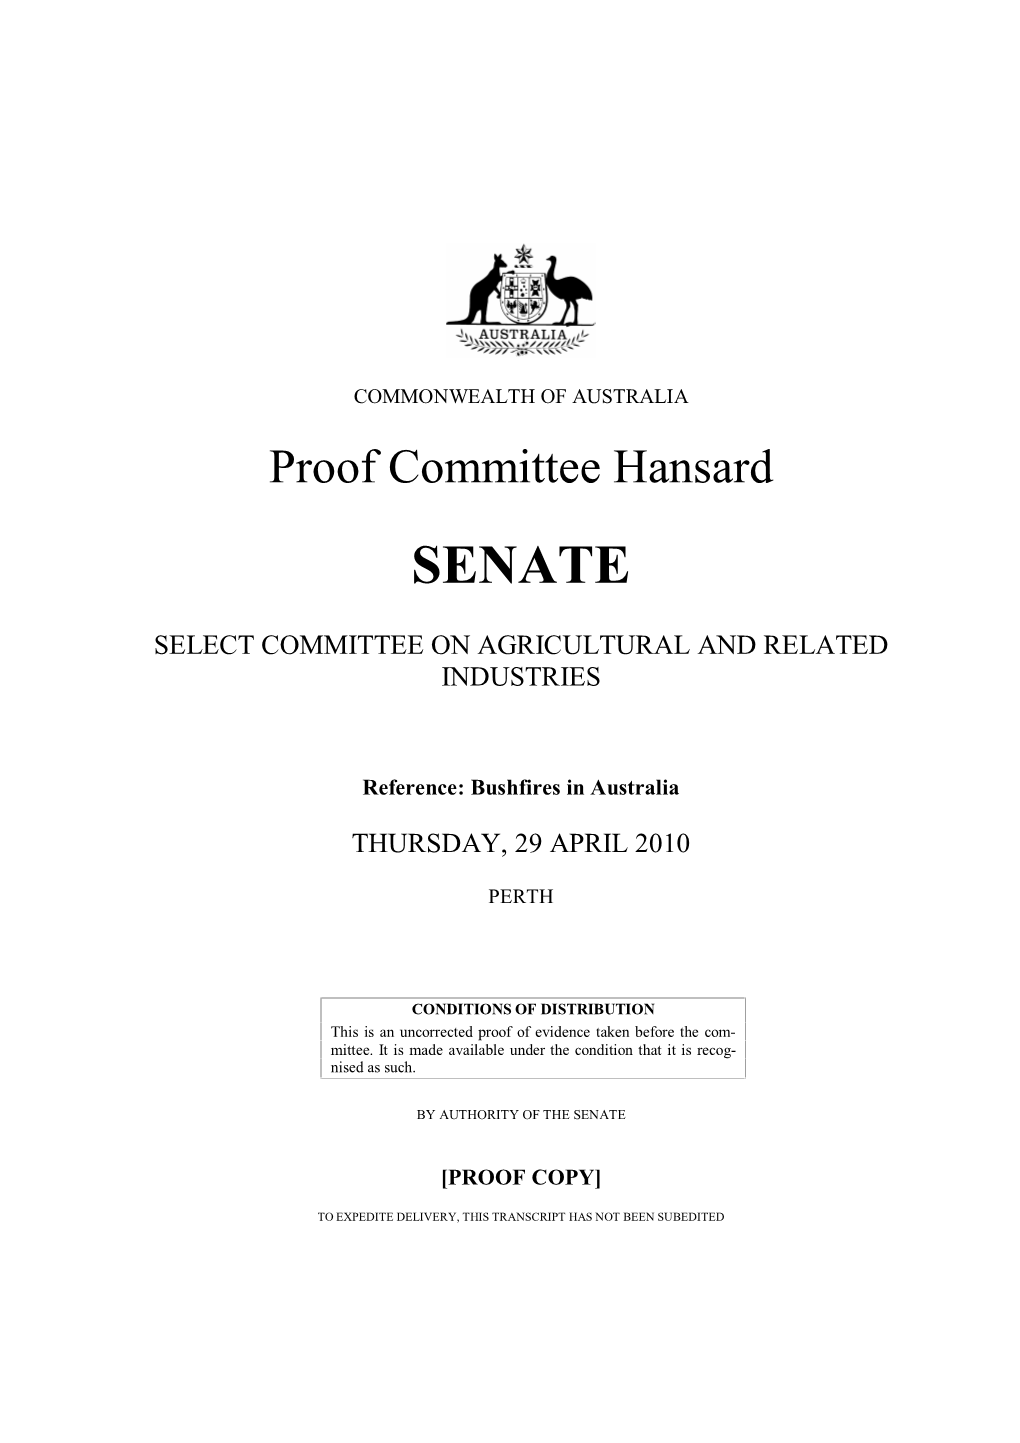 Proof Committee Hansard SENATE